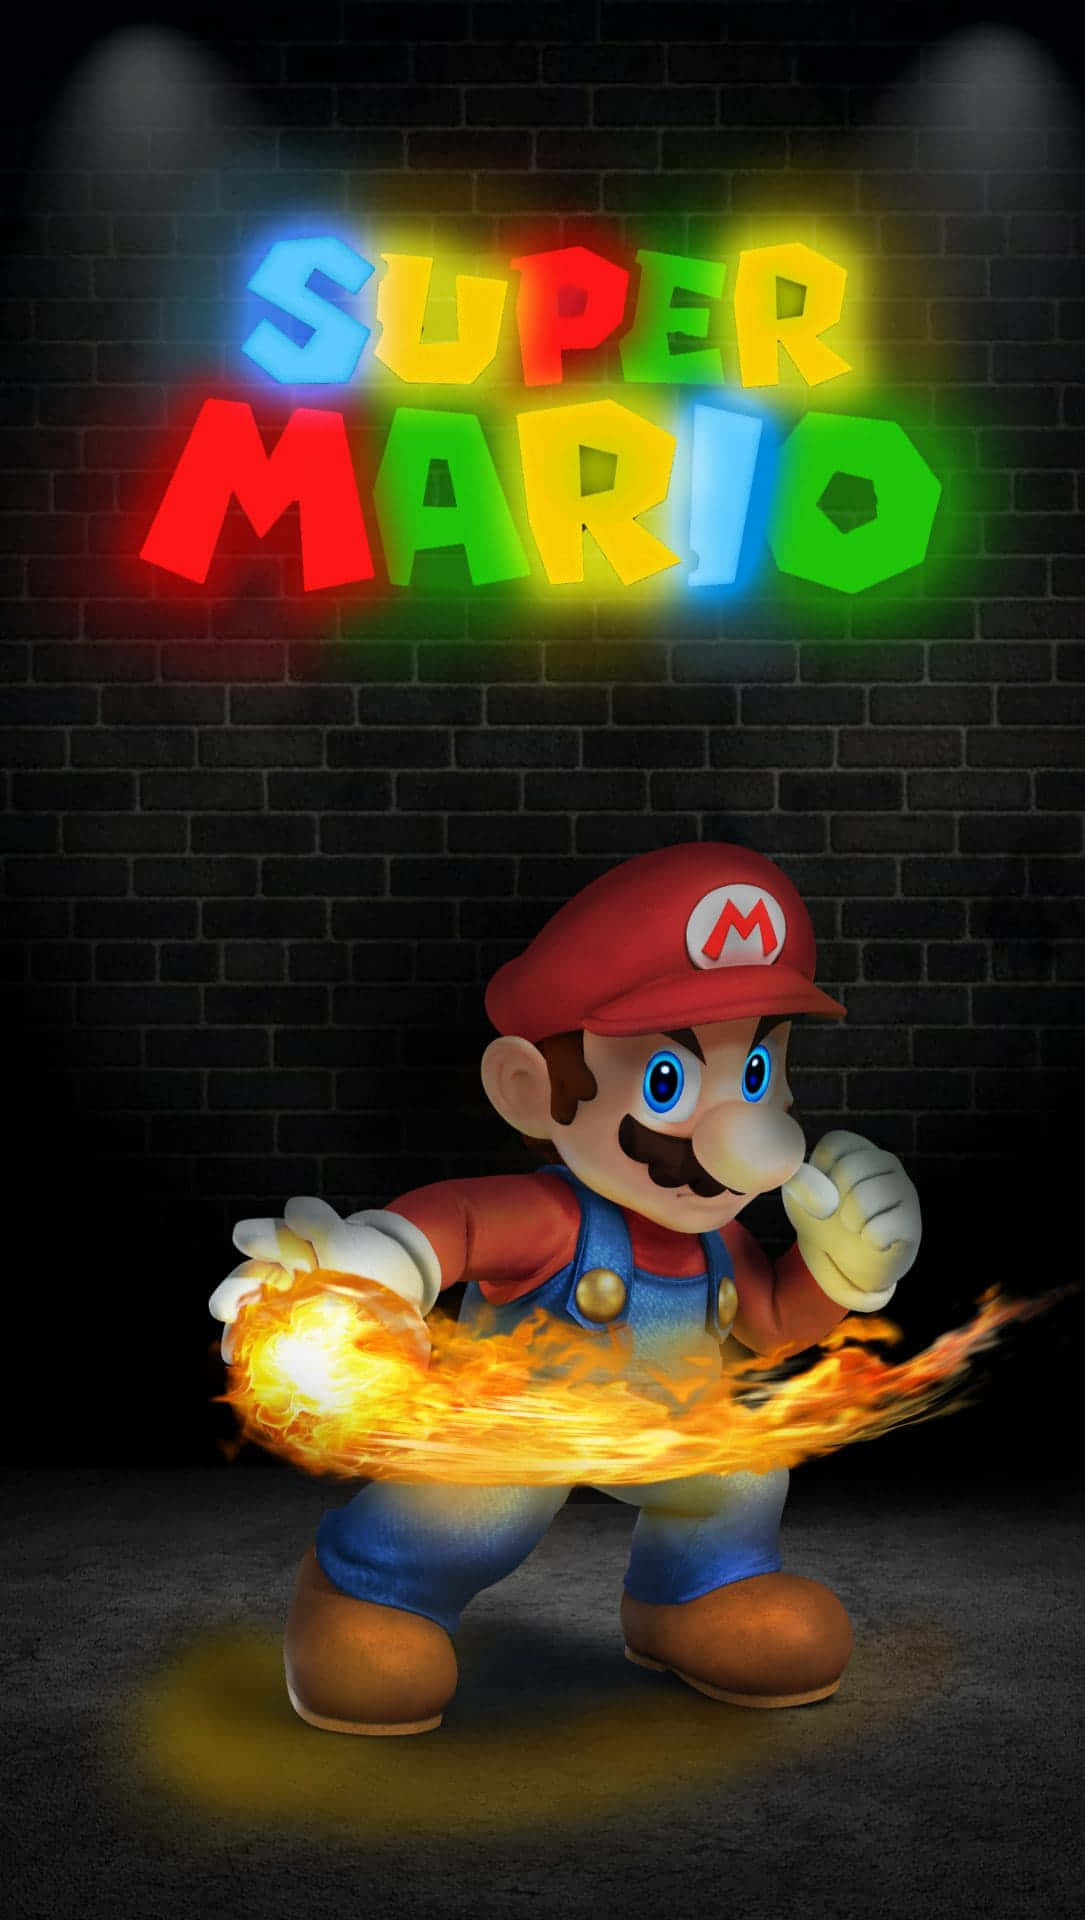 Enjoy Some Cool Retro Gaming Fun With Mario! Background